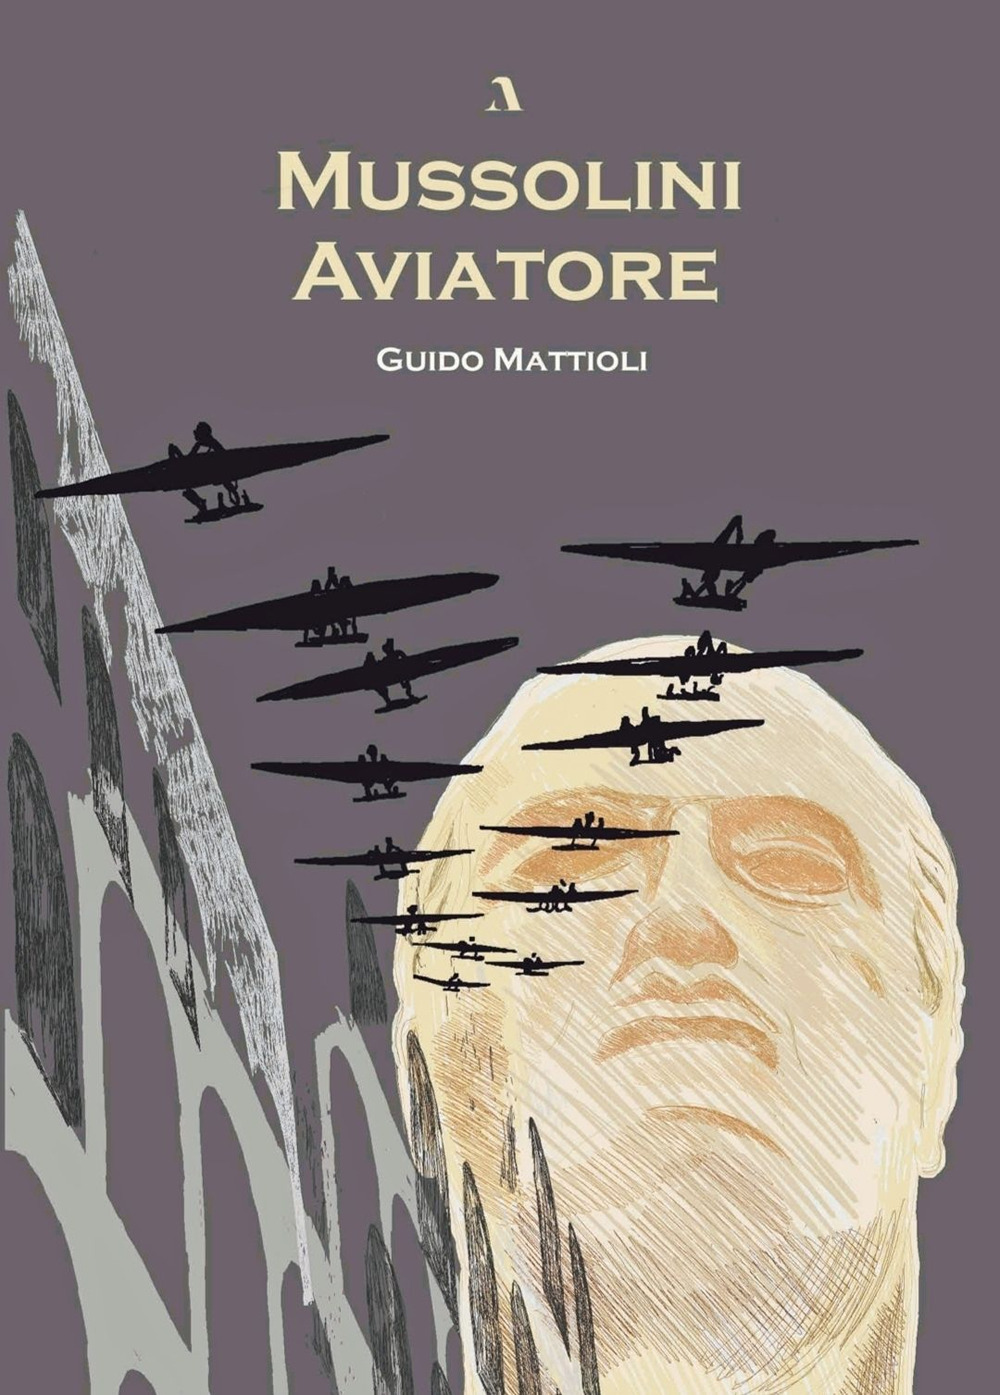 Mussolini aviatore